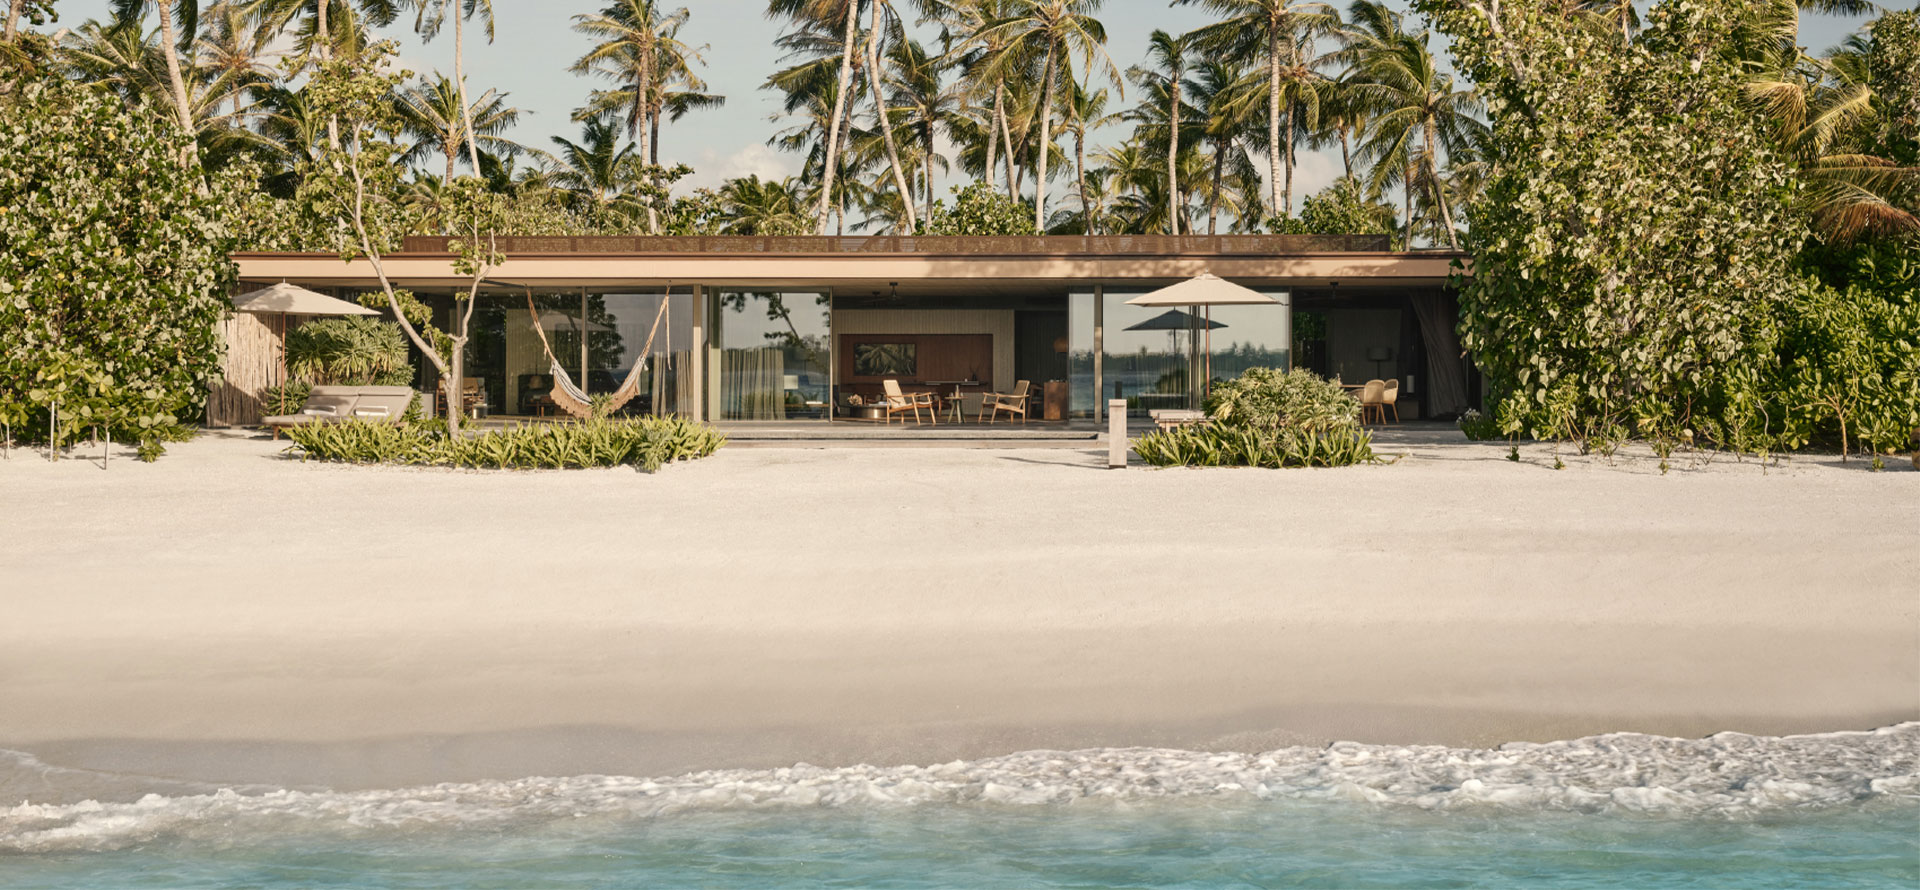 Maldives All-Inclusive Family Resorts on the beach.